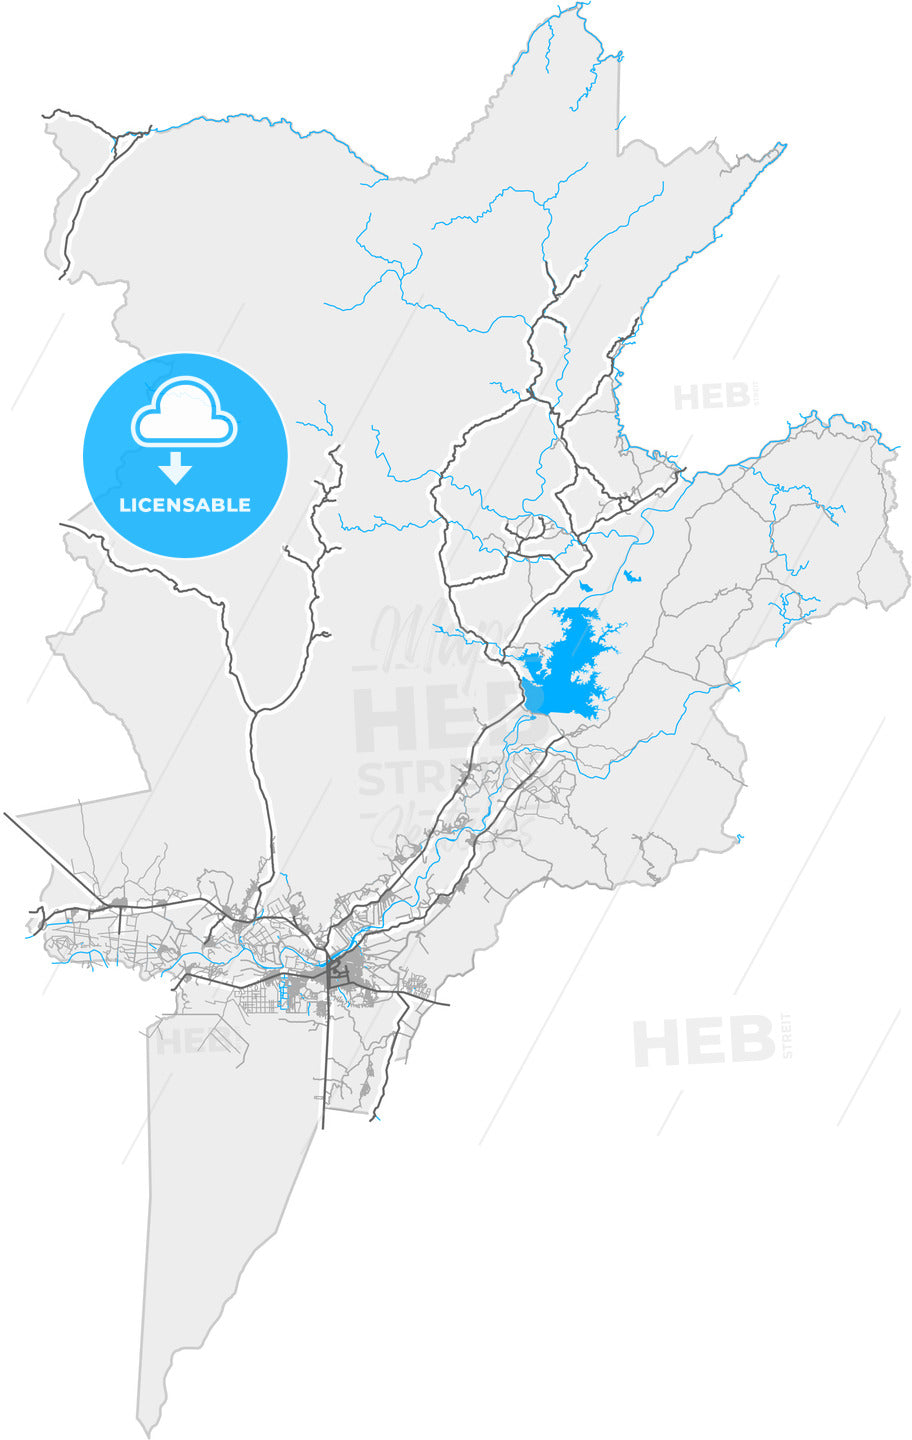 Sullana, Peru, high quality vector map